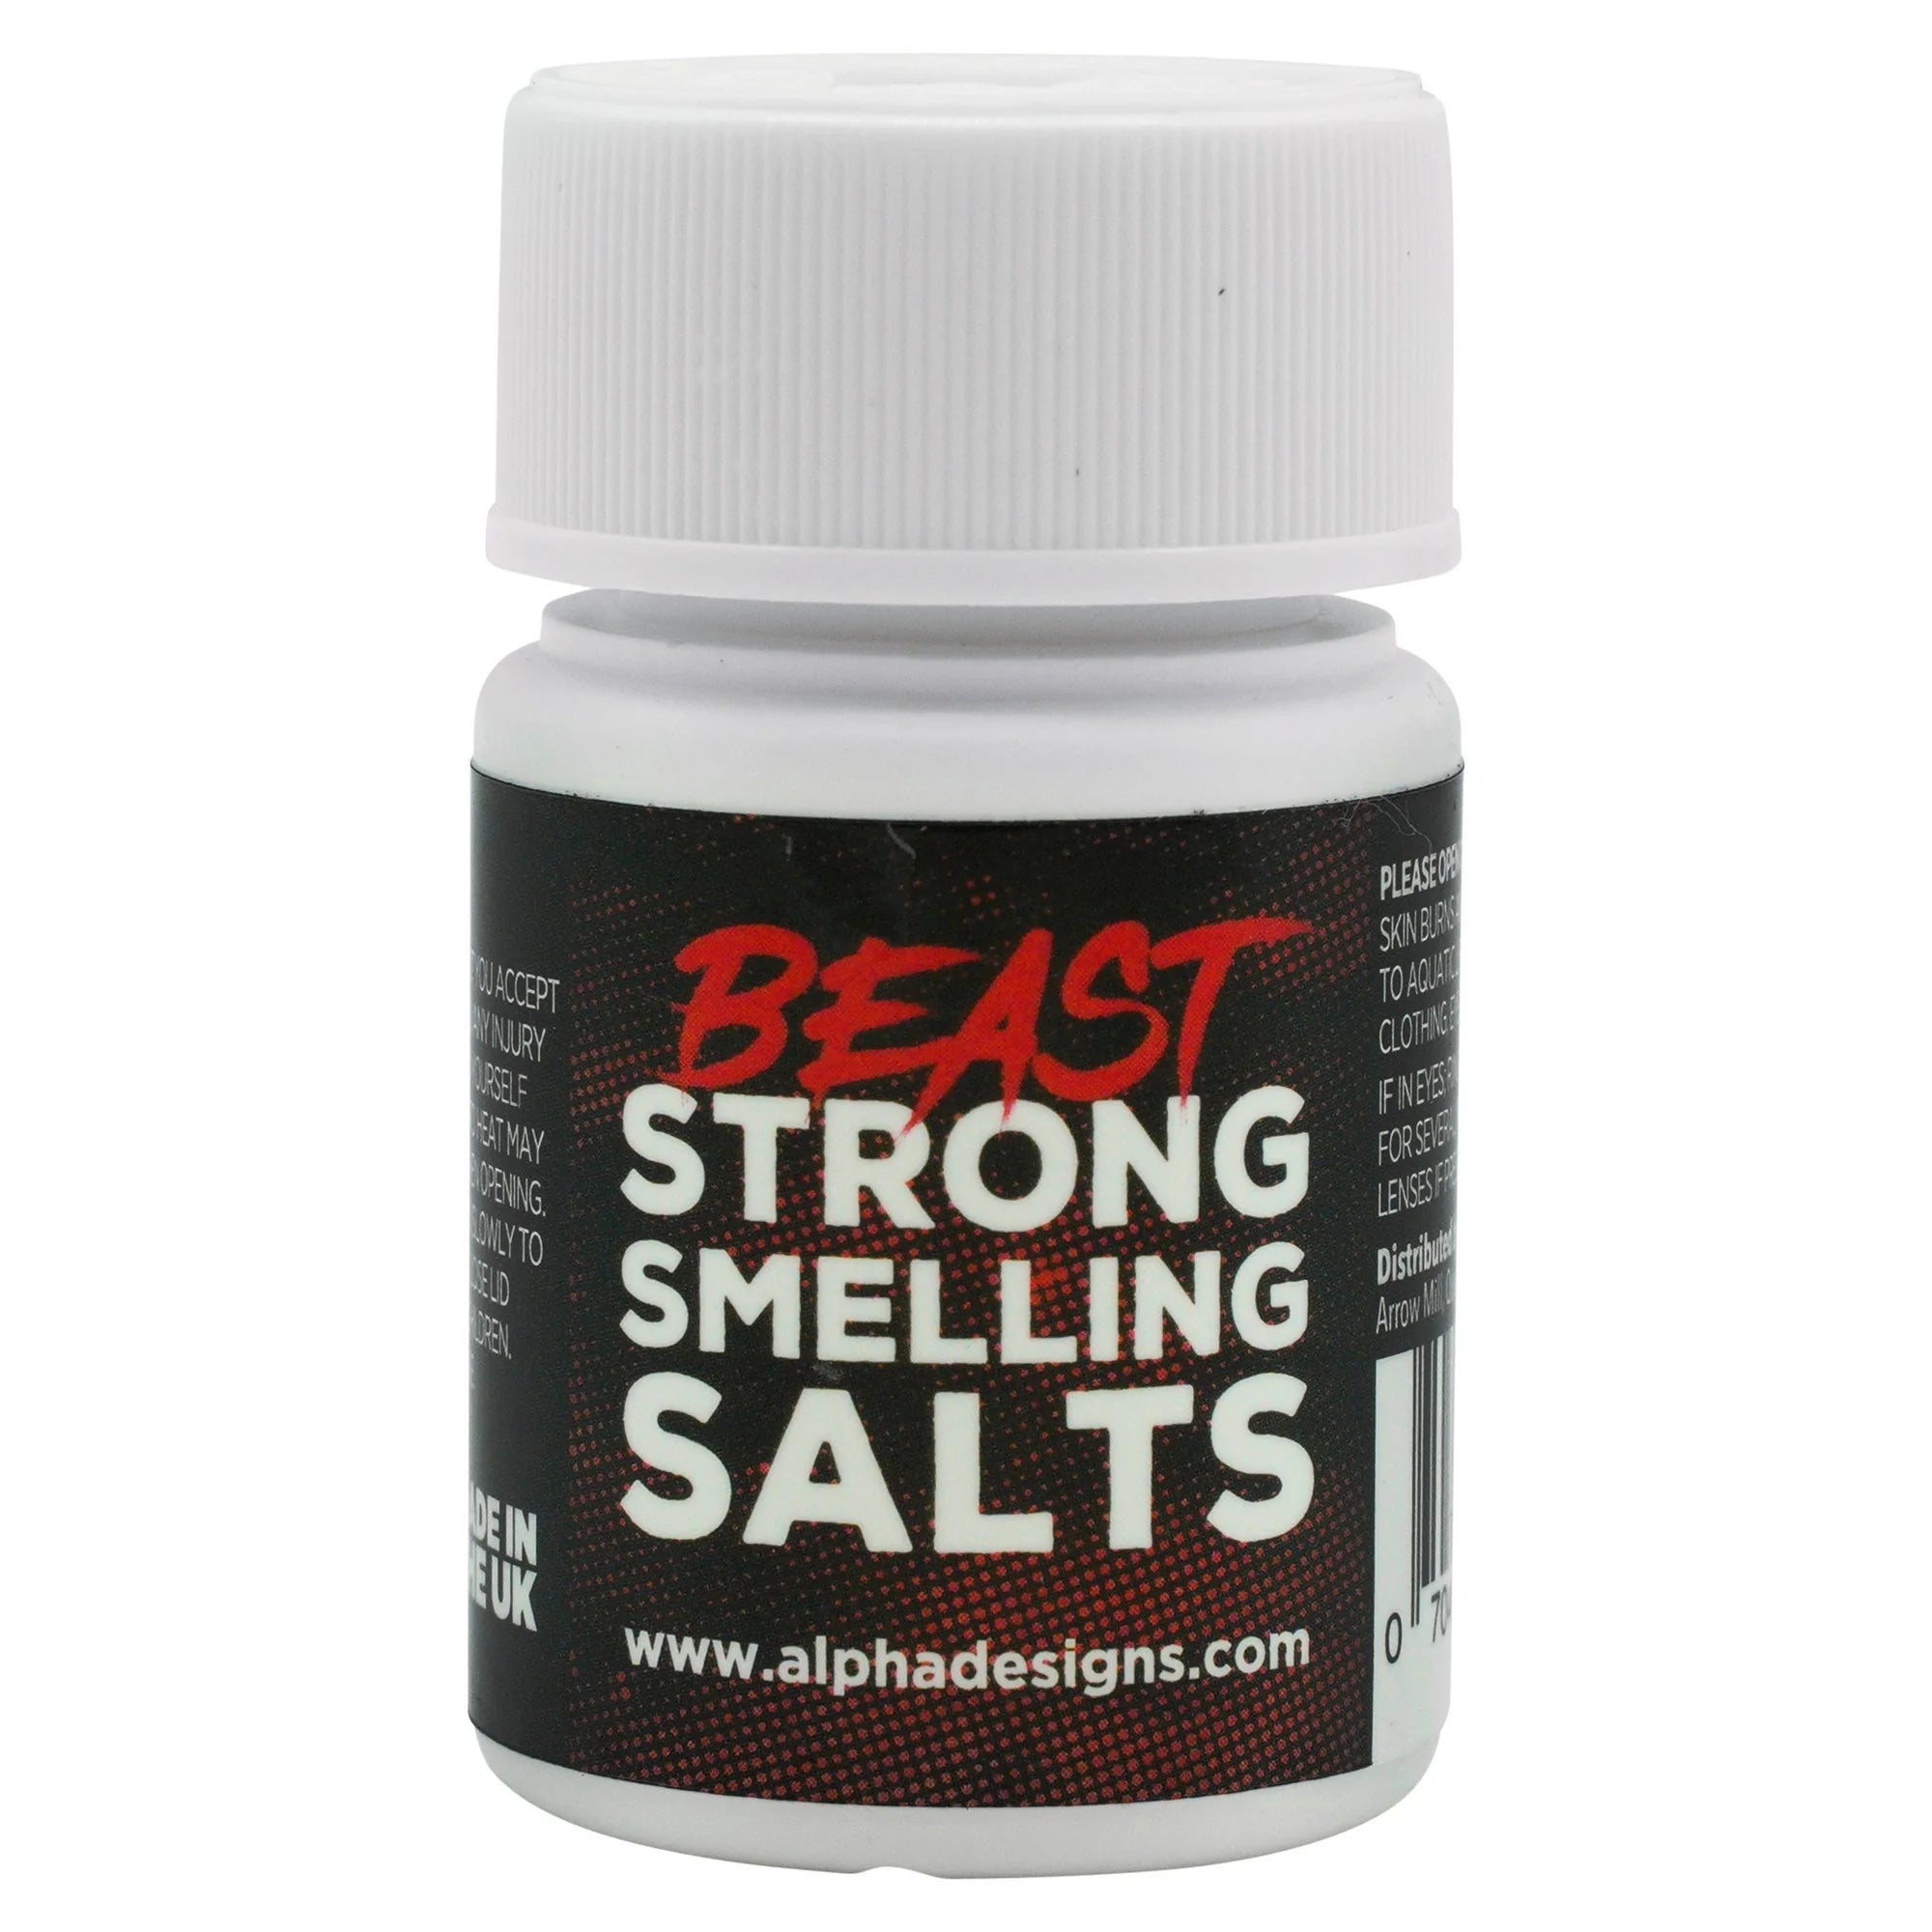 Alpha Designs Beast Smelling Salt